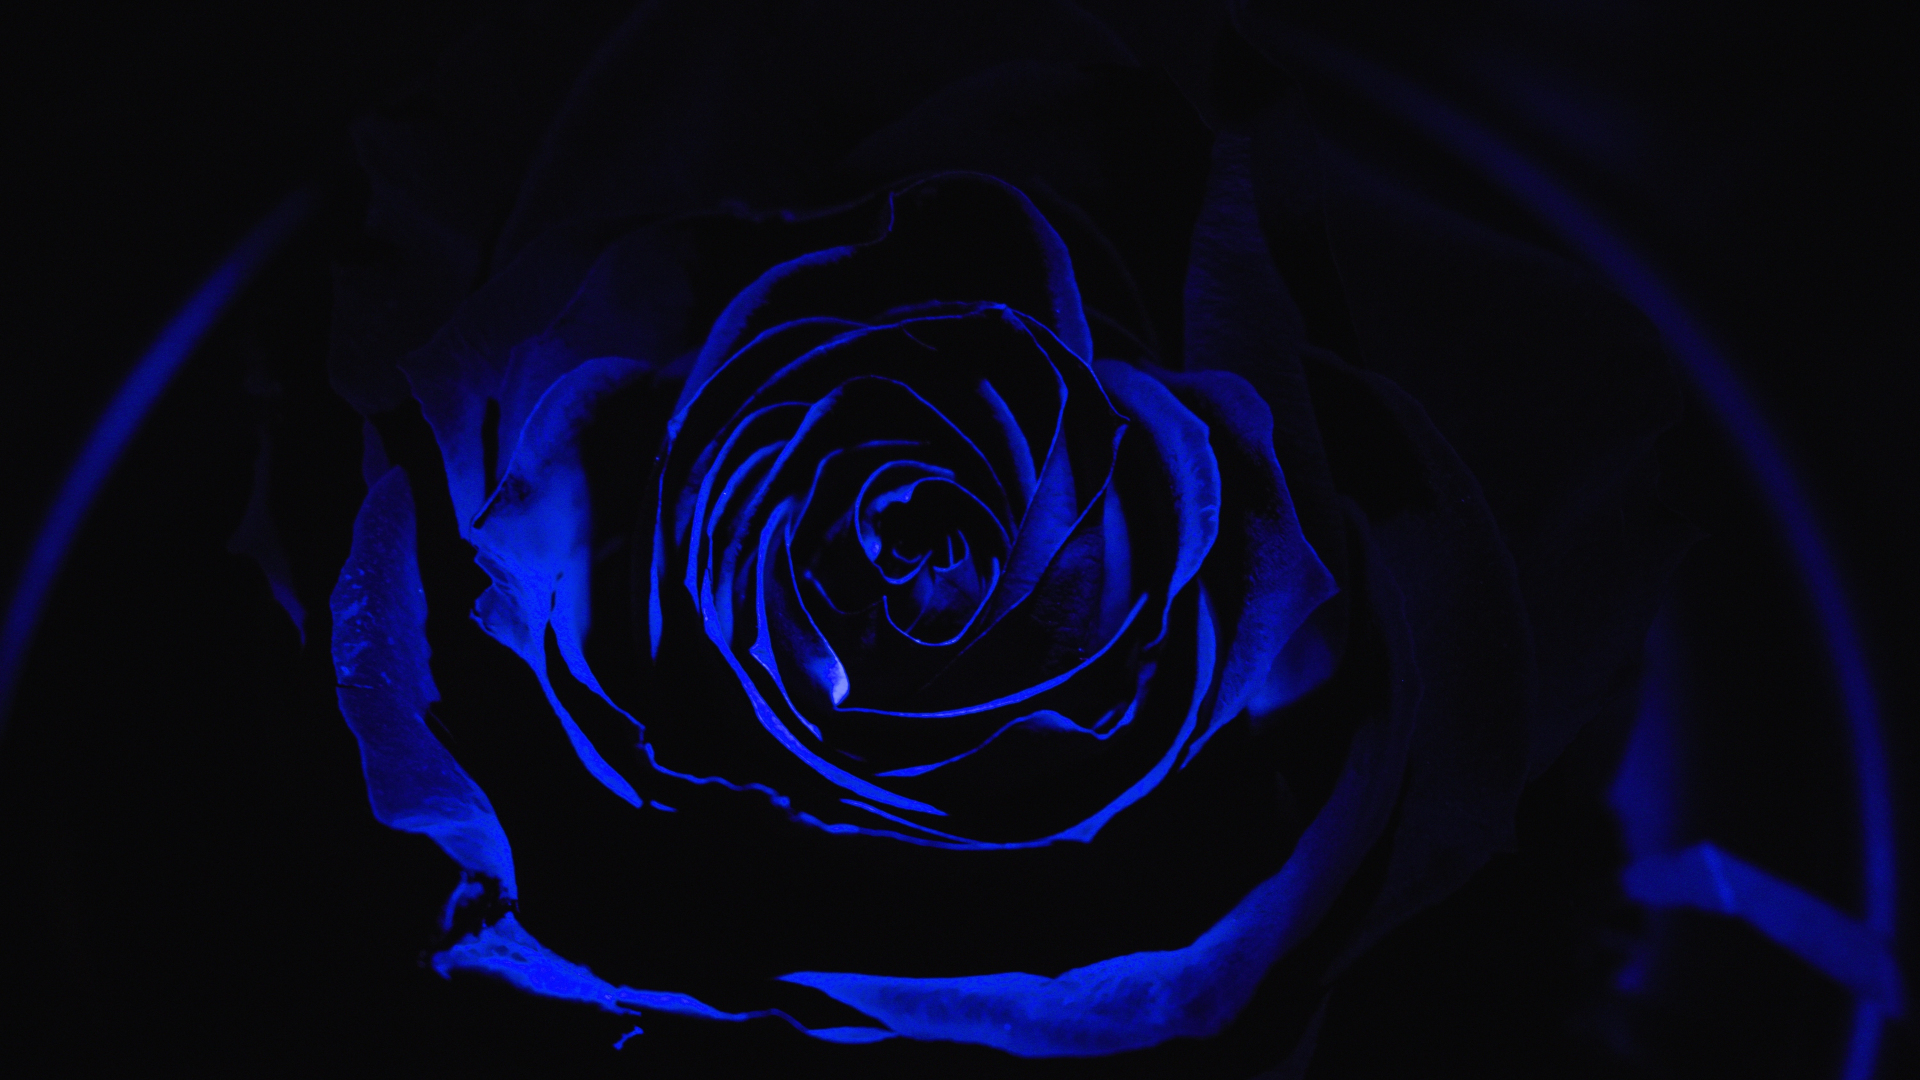 Download wallpaper 1920x1080 blue rose, dark, close up, full hd, hdtv, fhd,  1080p wallpaper, 1920x1080 hd background, 10127